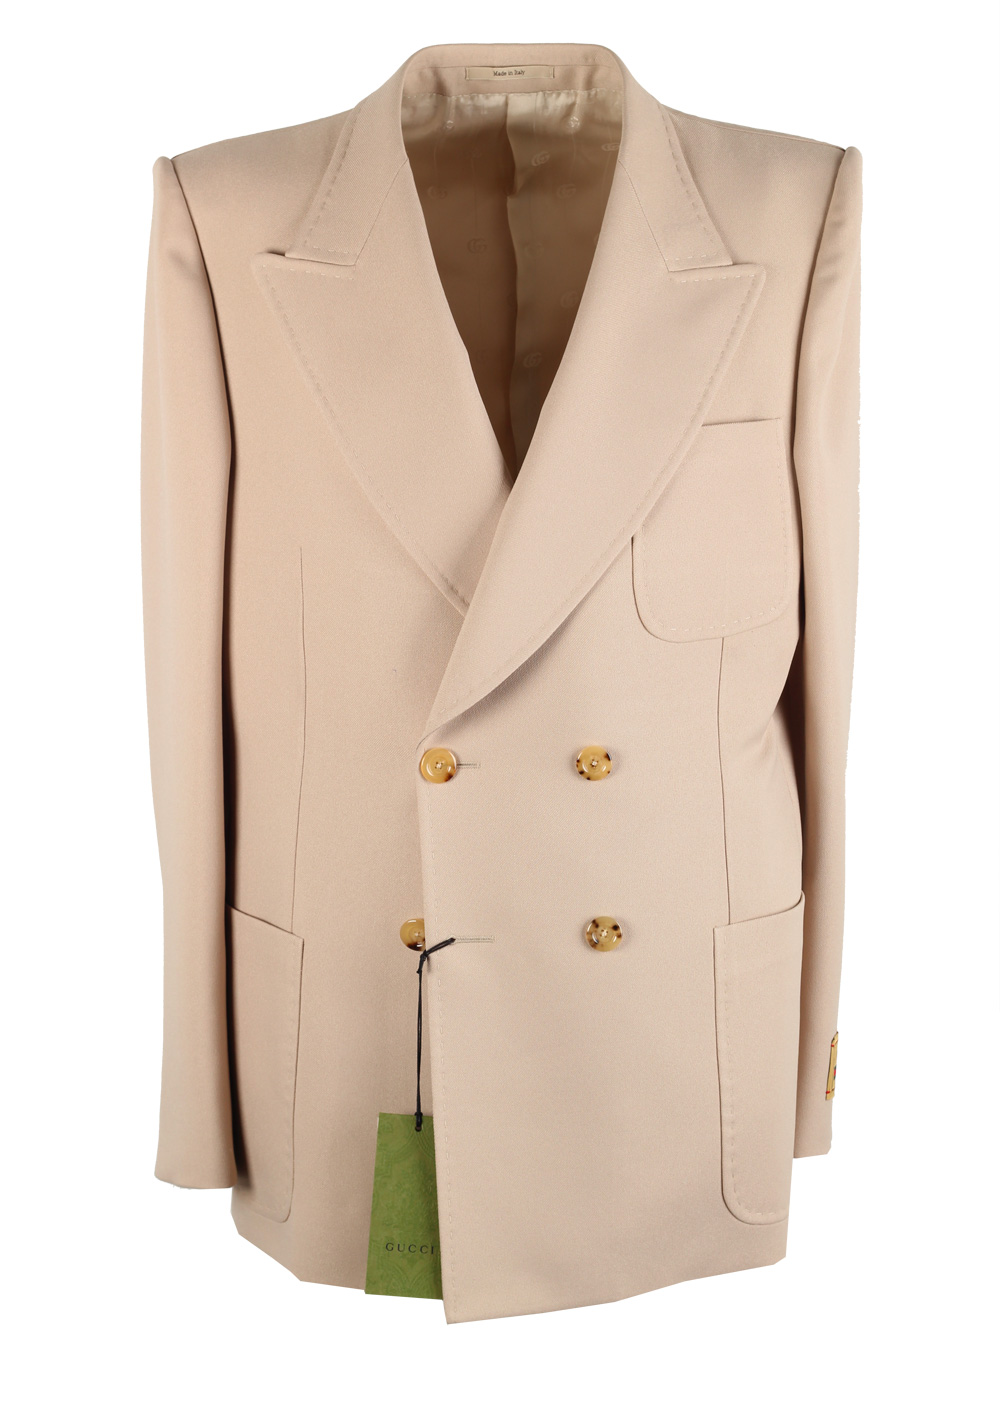 Gucci Beige Double Breasted Sport Coat Size 52 / 42R U.S. | Costume Limité